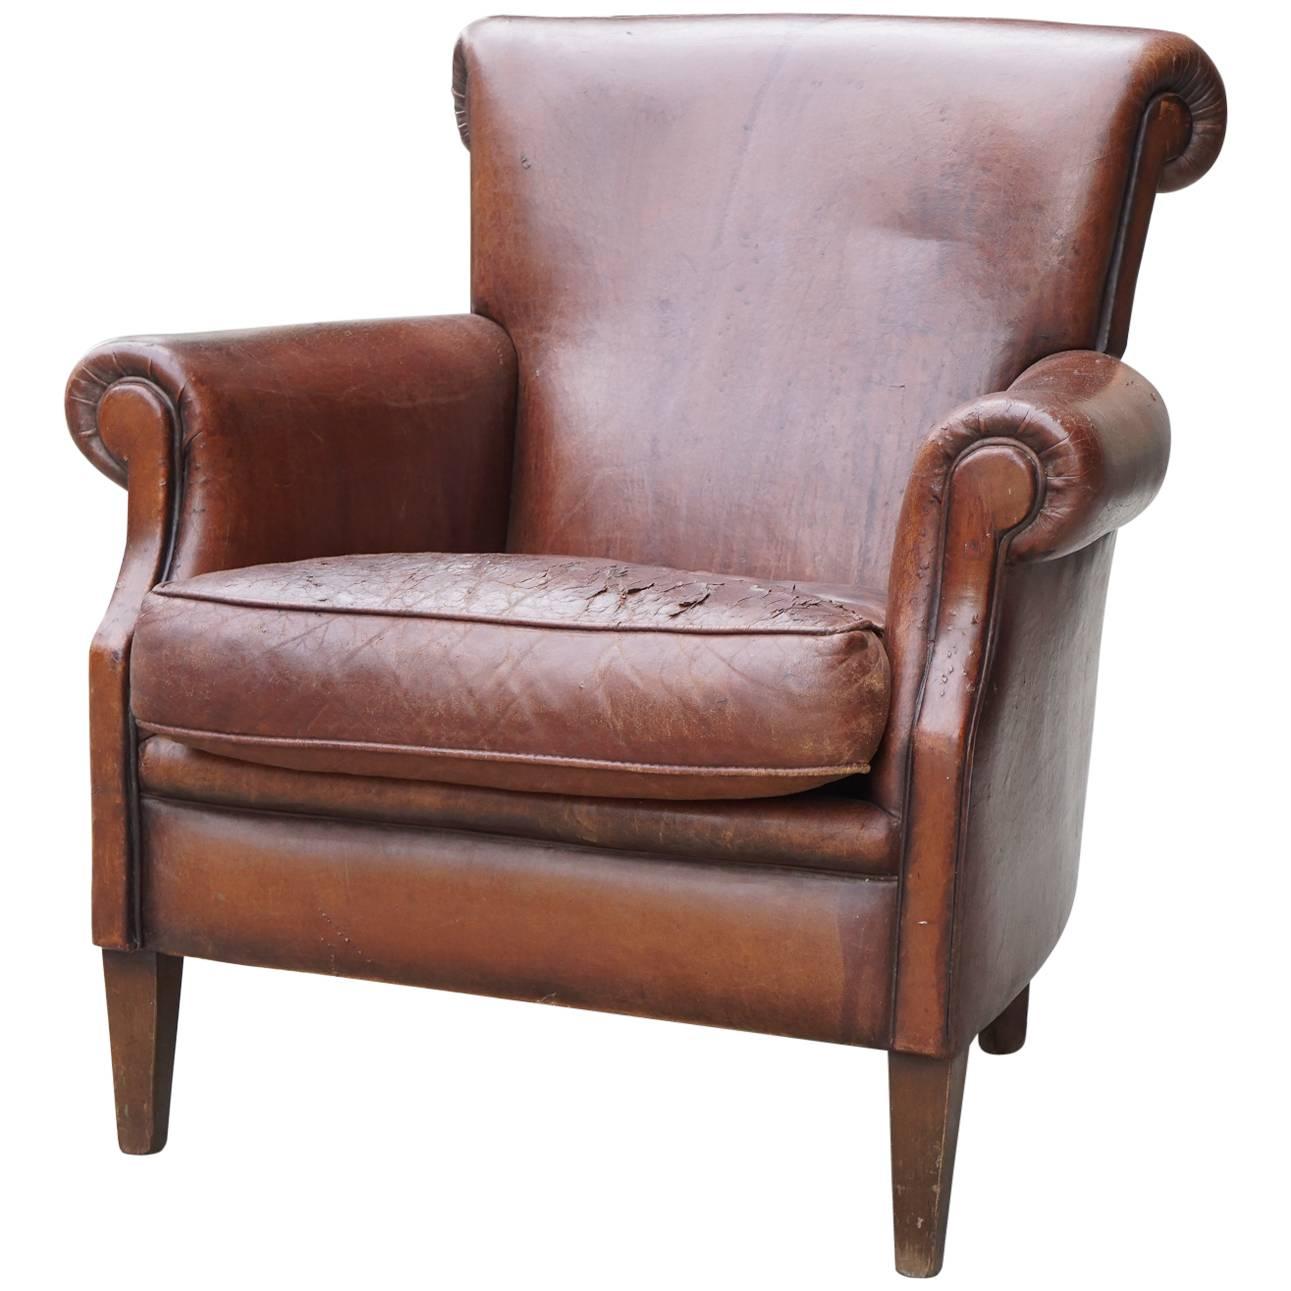 American Period Art Deco Leather Club Chair